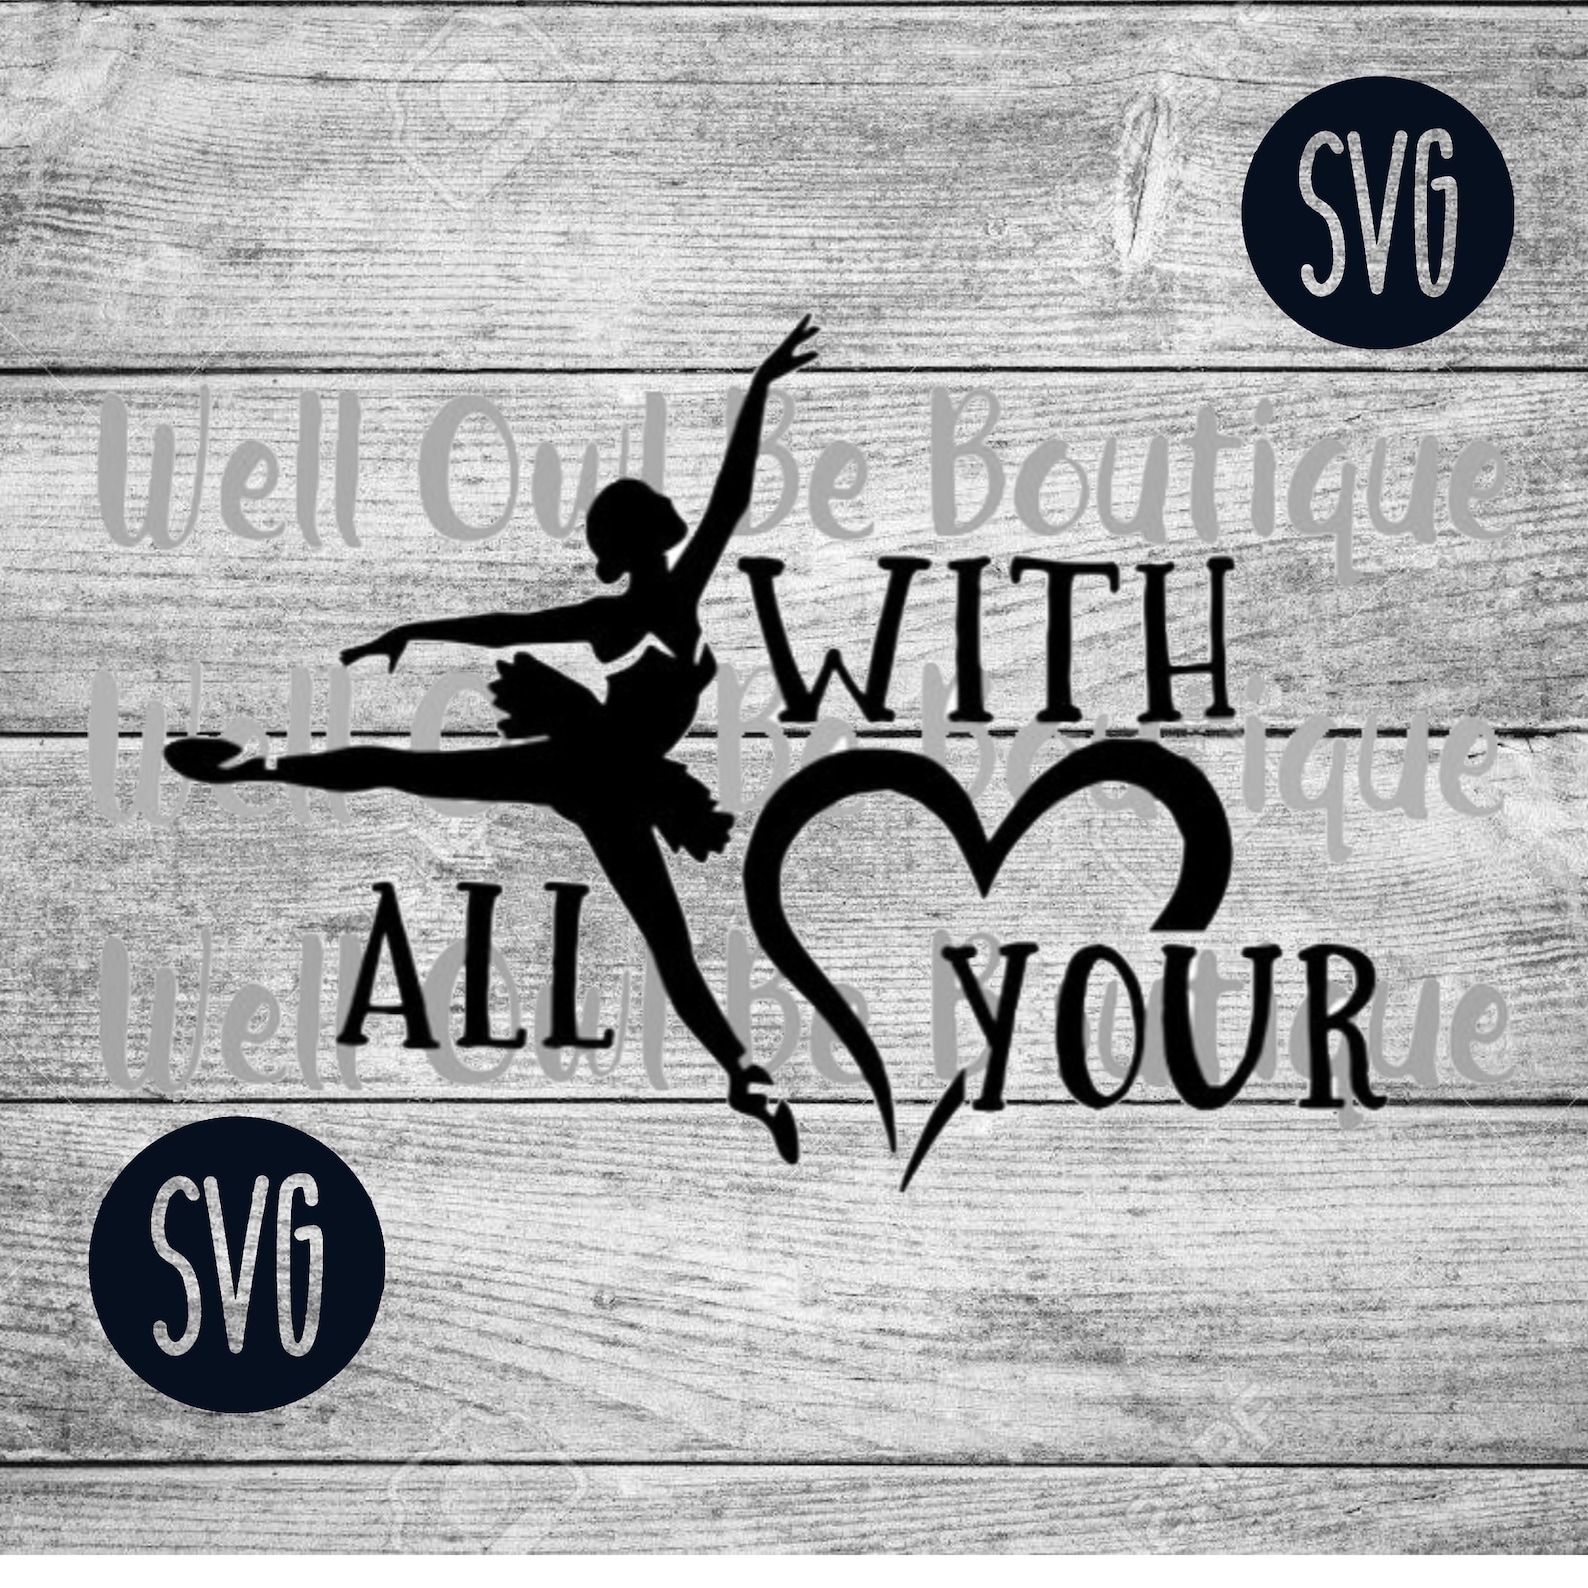 dance with all your heart|dance svg|ballet svg|dancing svg|ballet dancer svg|heart svg|dance|ballet|svg